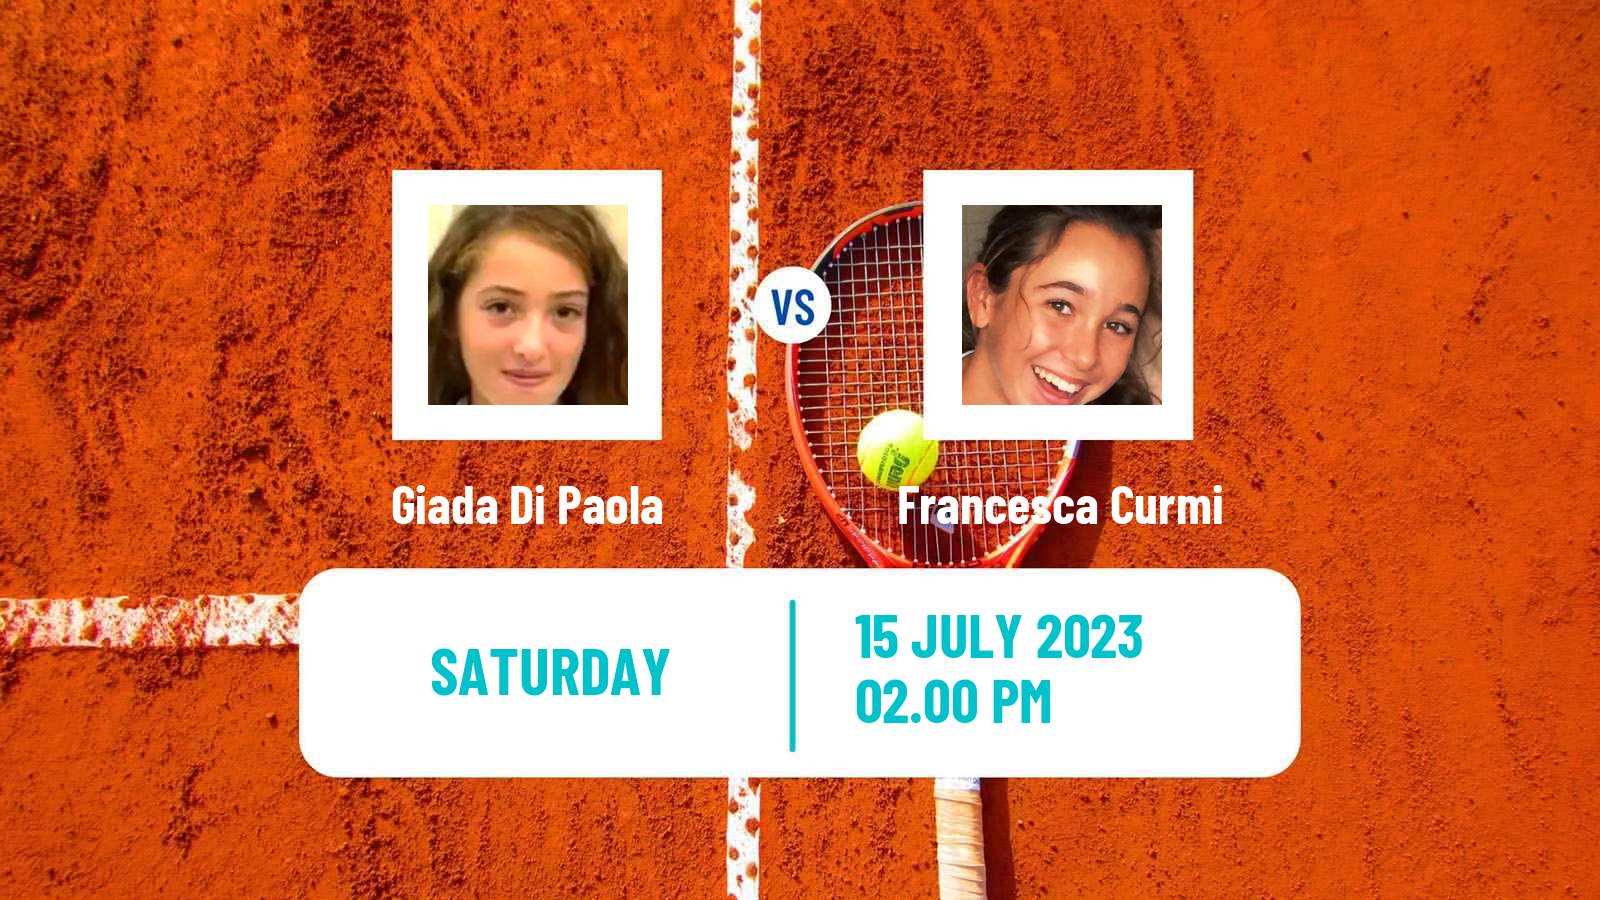 Tennis WTA Palermo Giada Di Paola - Francesca Curmi